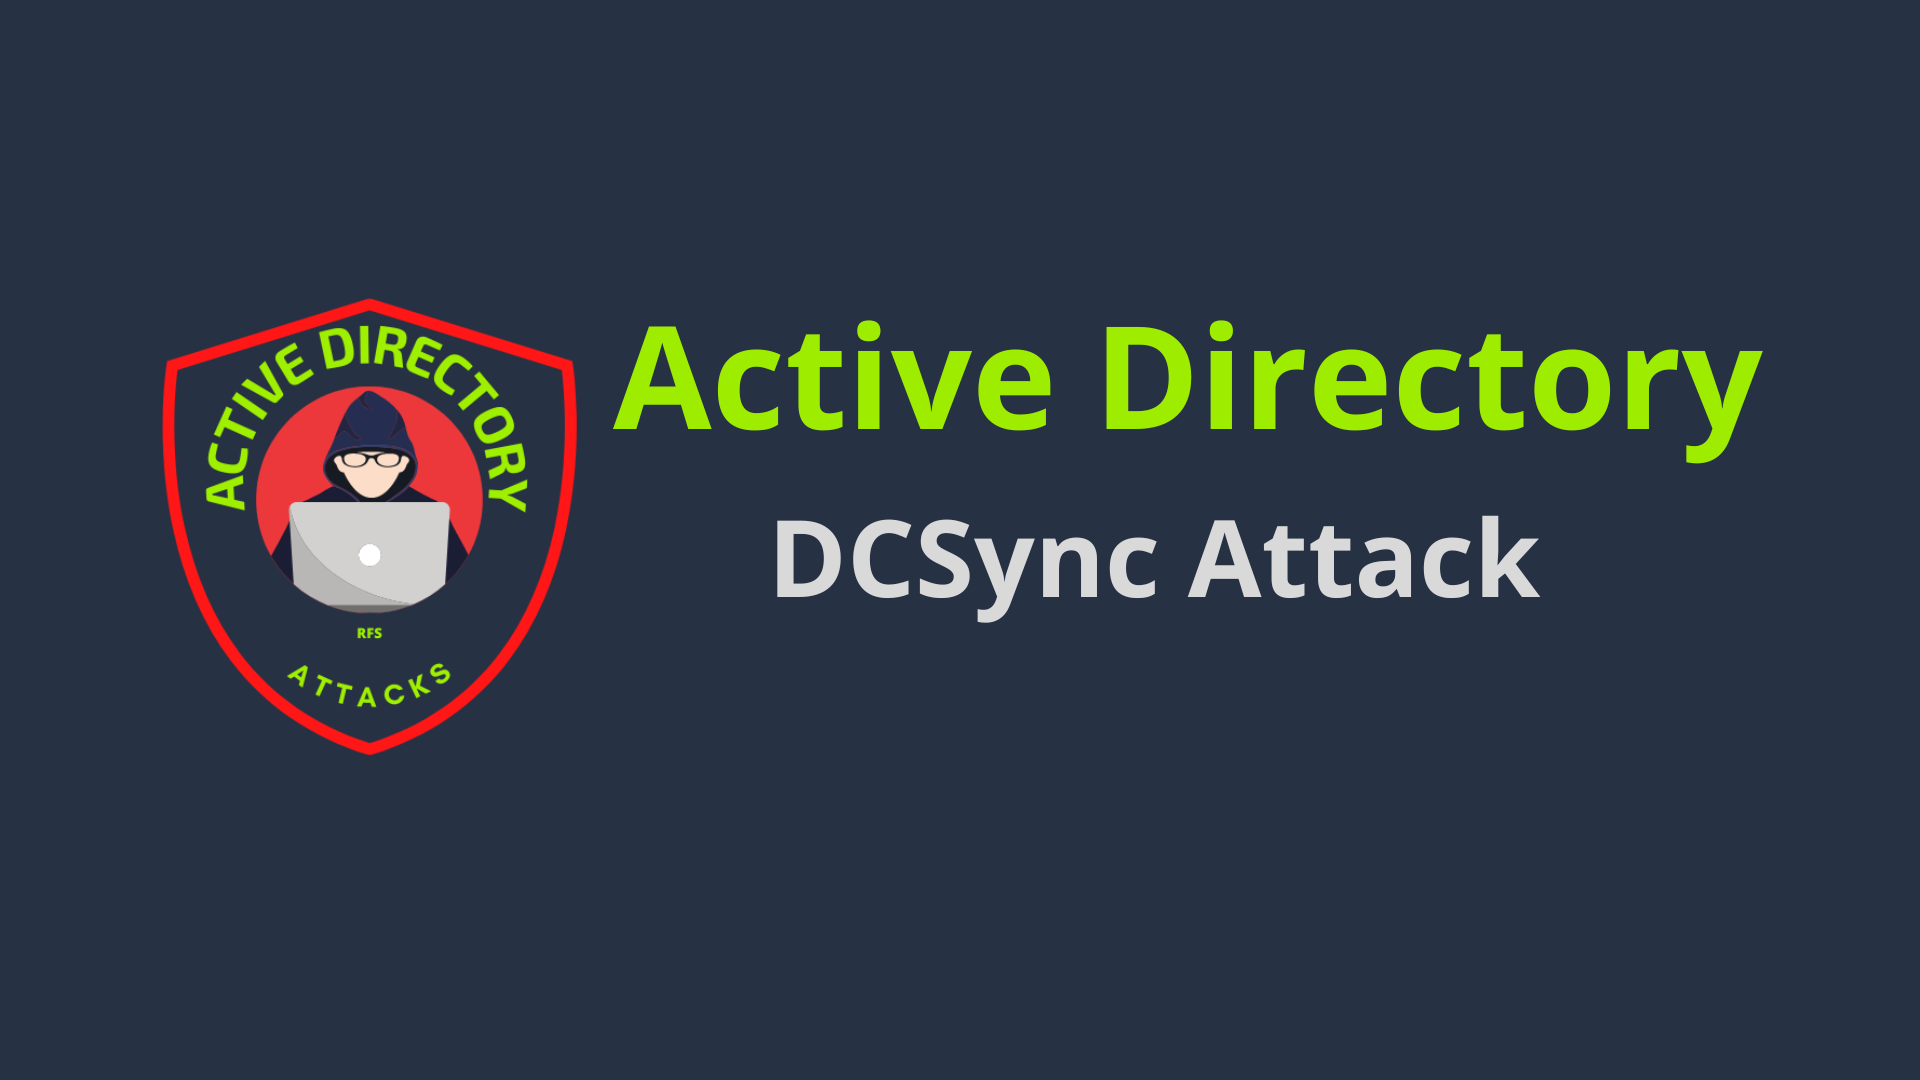 DCSync Attack